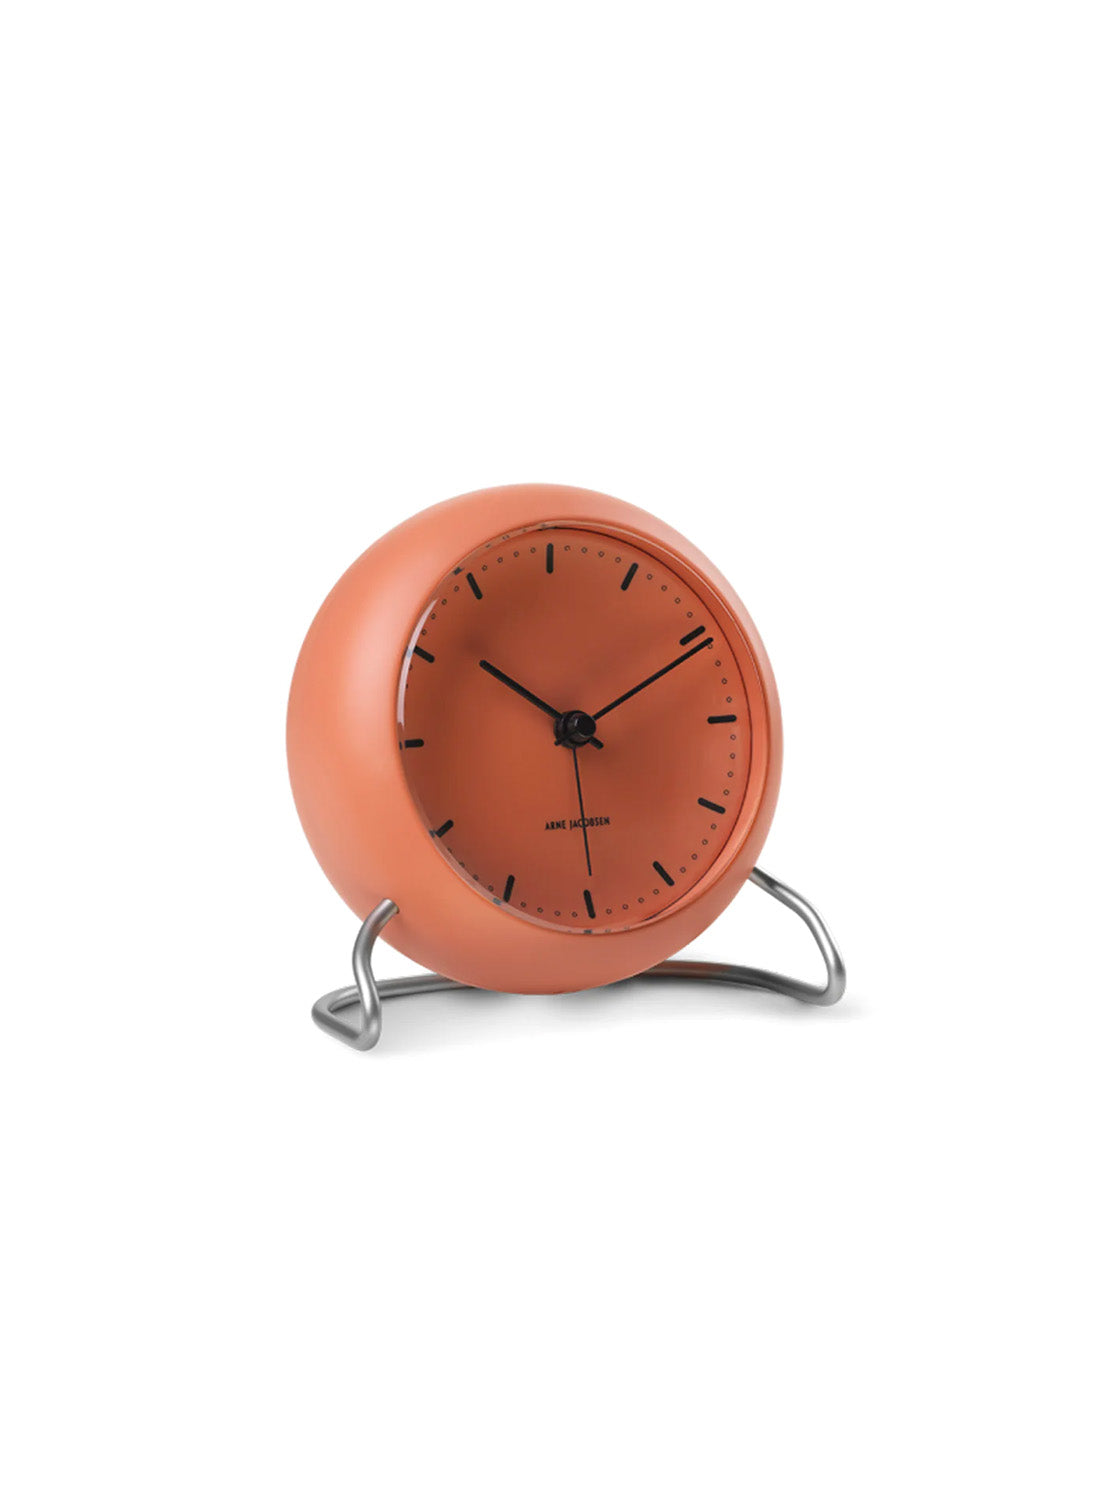 Arne Jacobsen City Hall Alarm Clock, pale orange